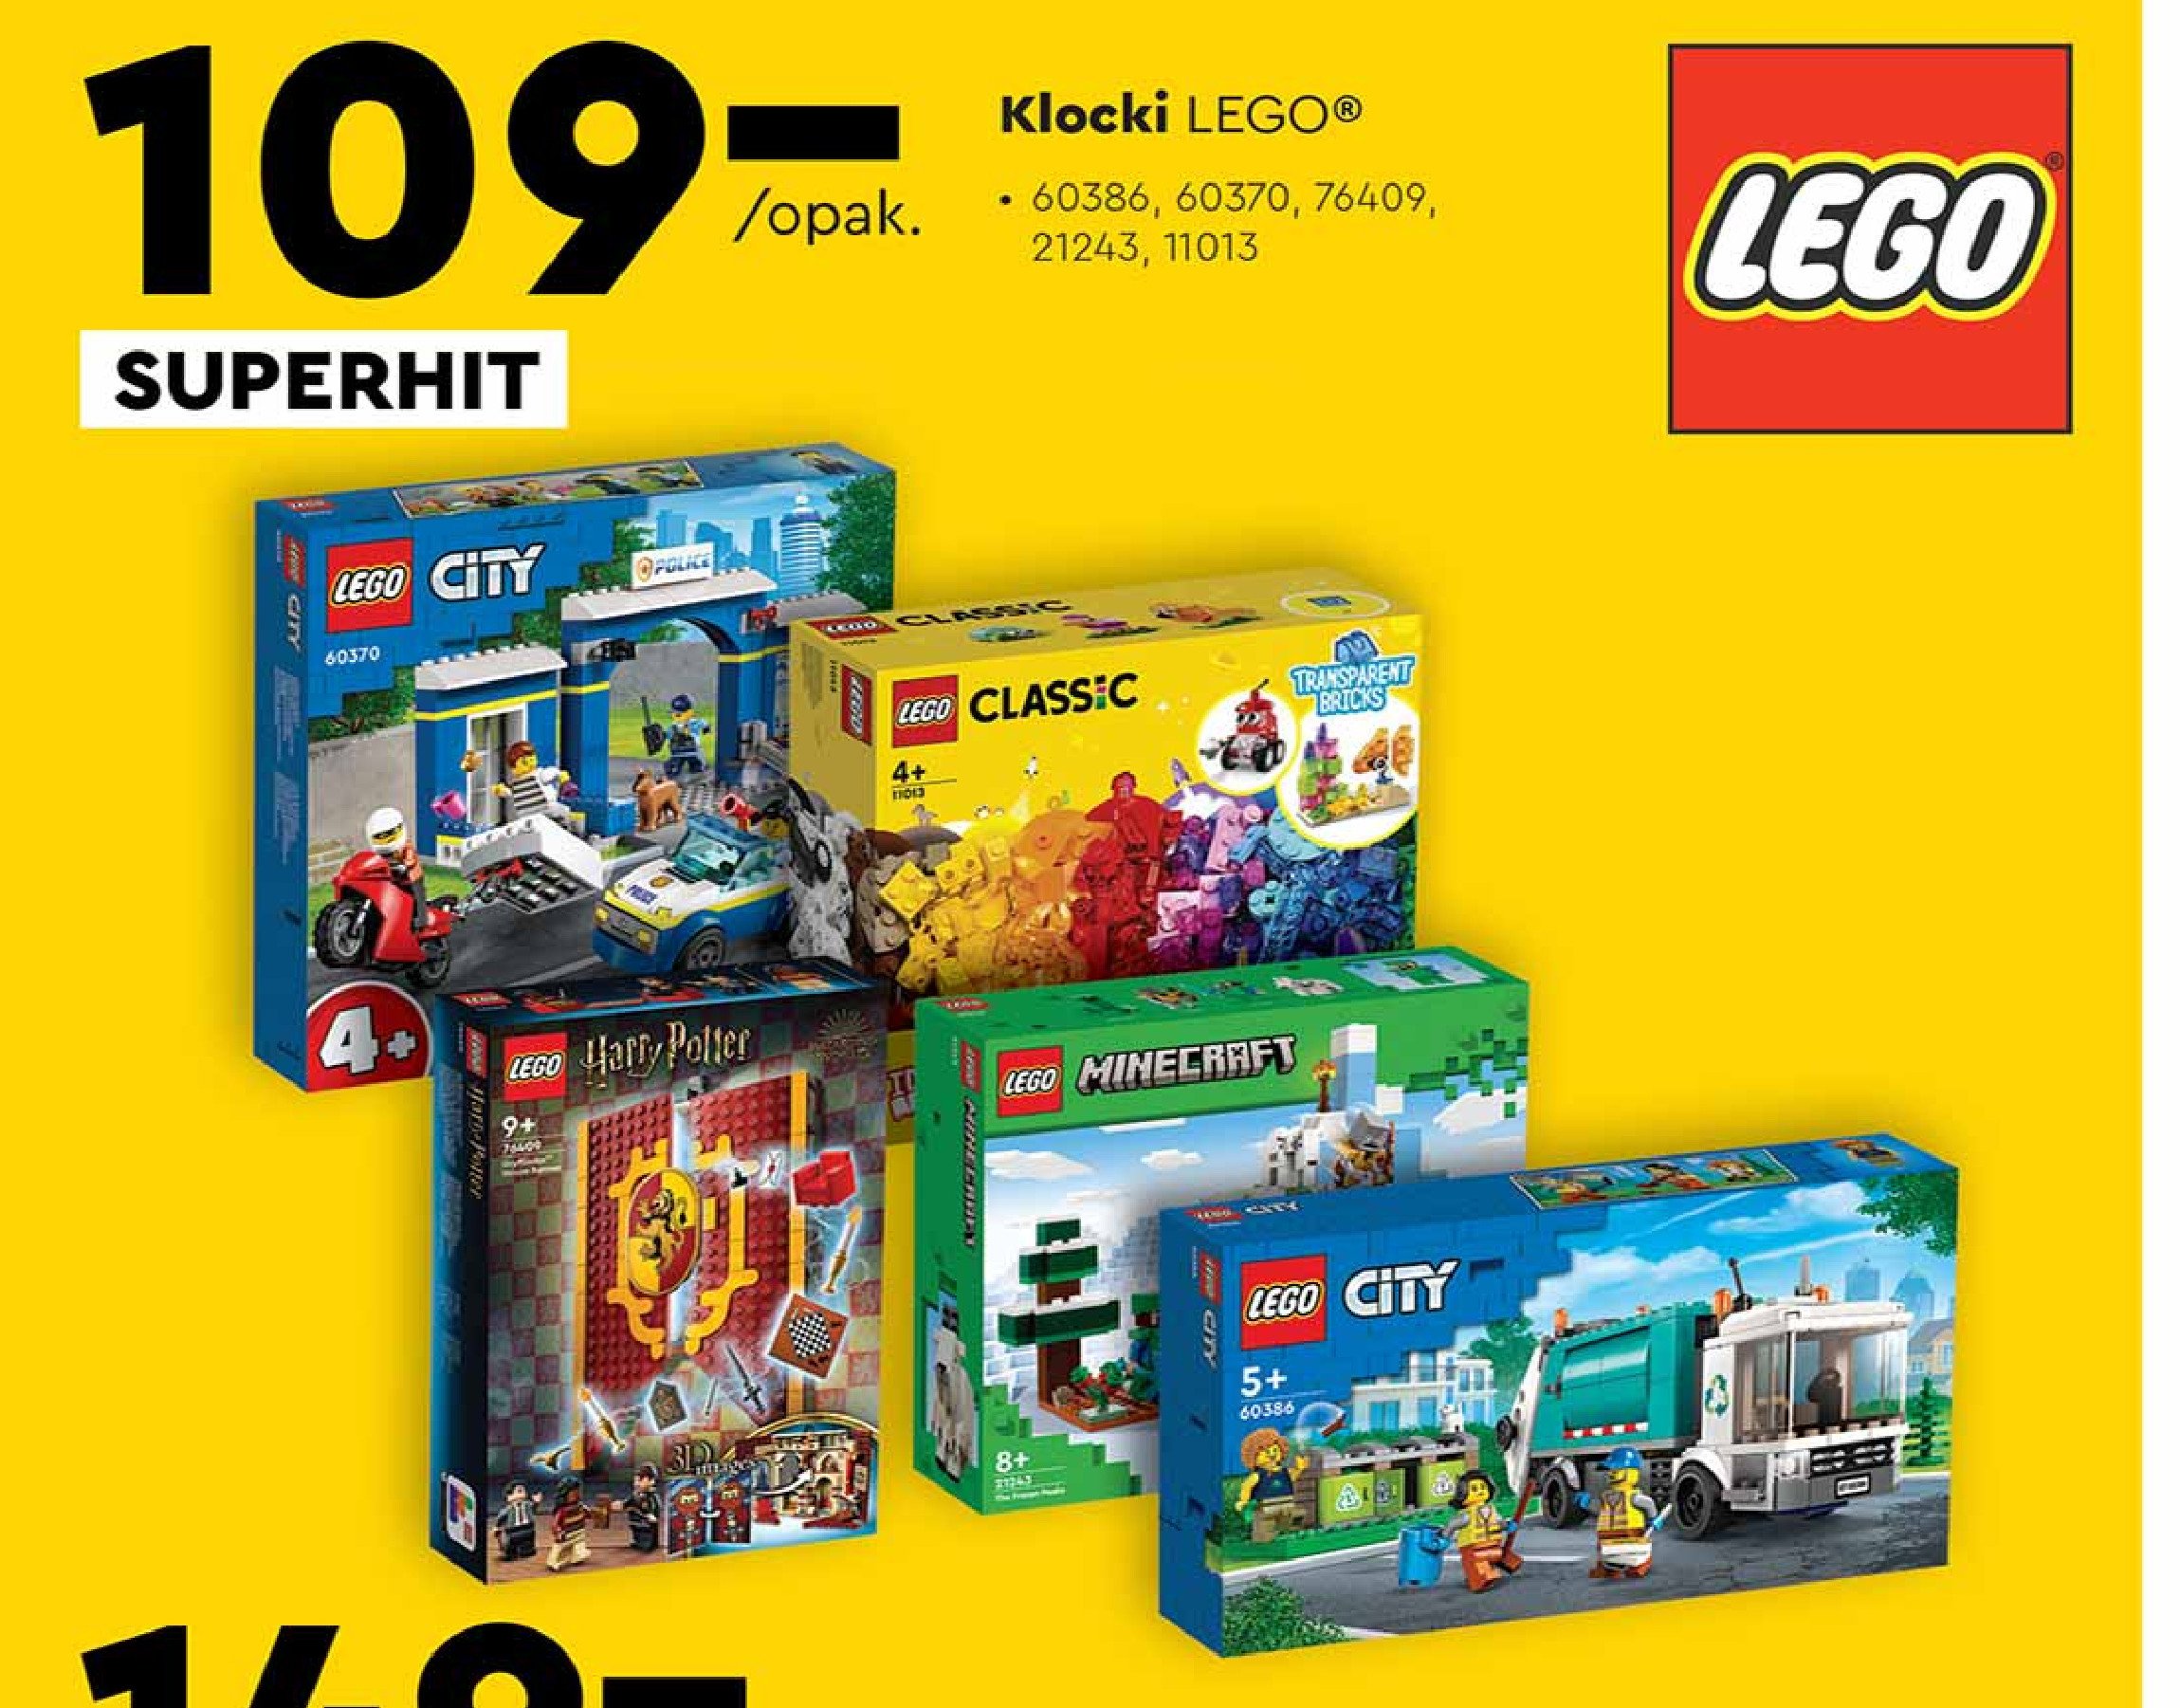 Klocki 21243 Lego minecraft promocja